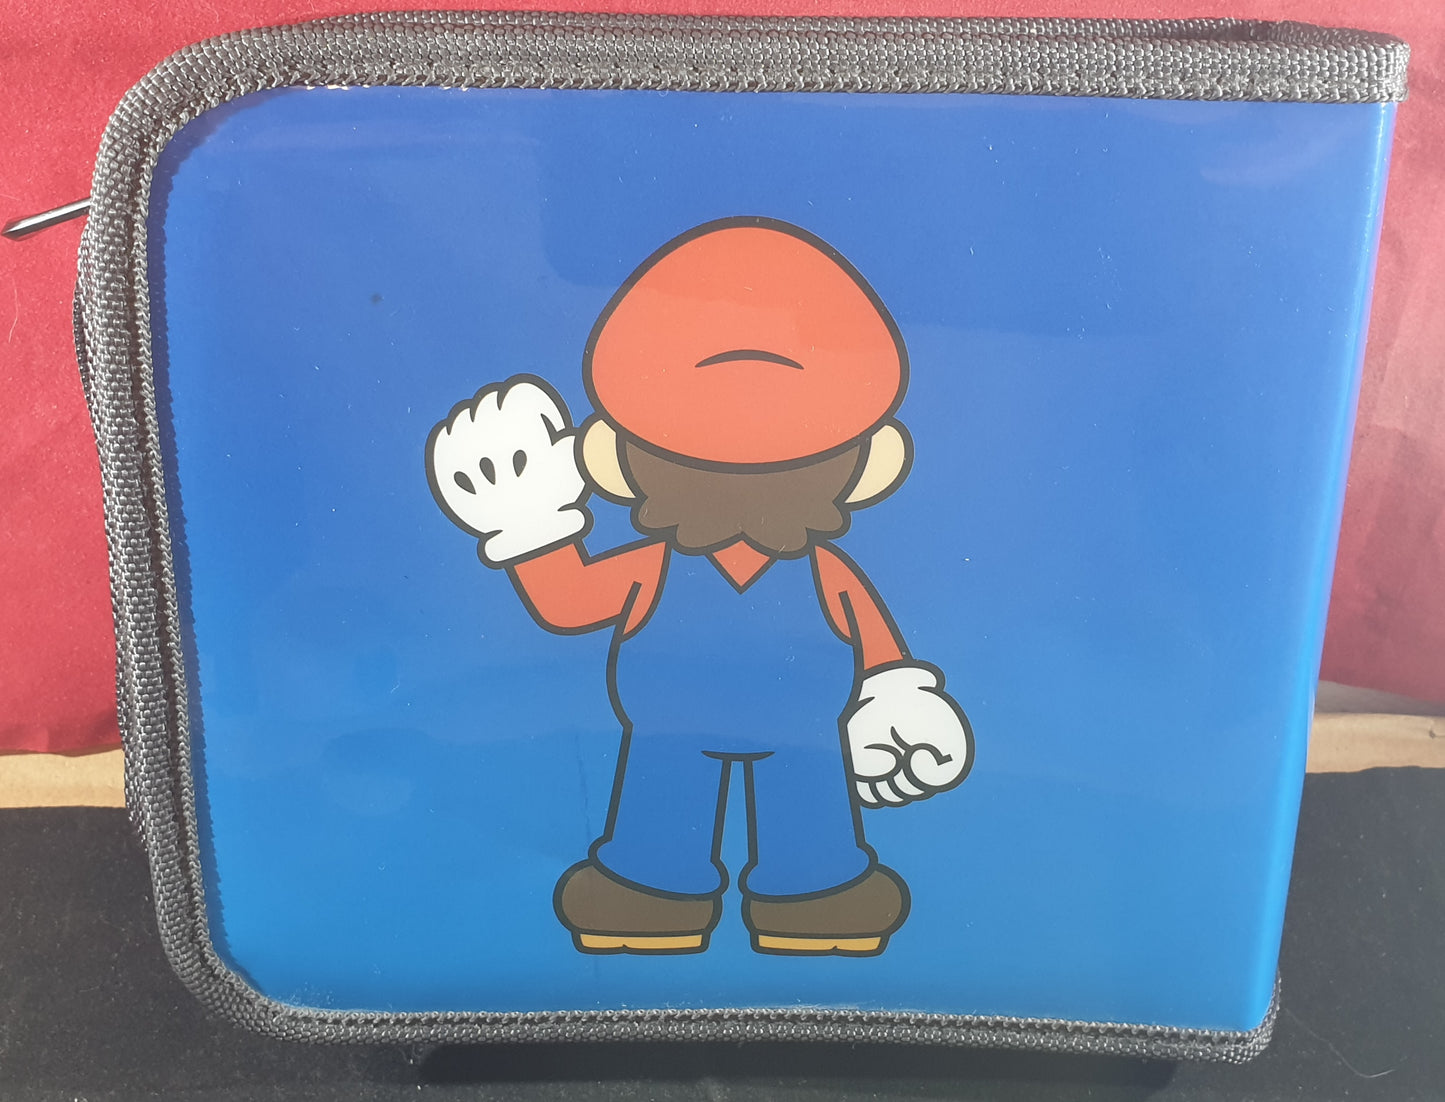 Super Mario Nintendo 3DS Carry Case Accessory